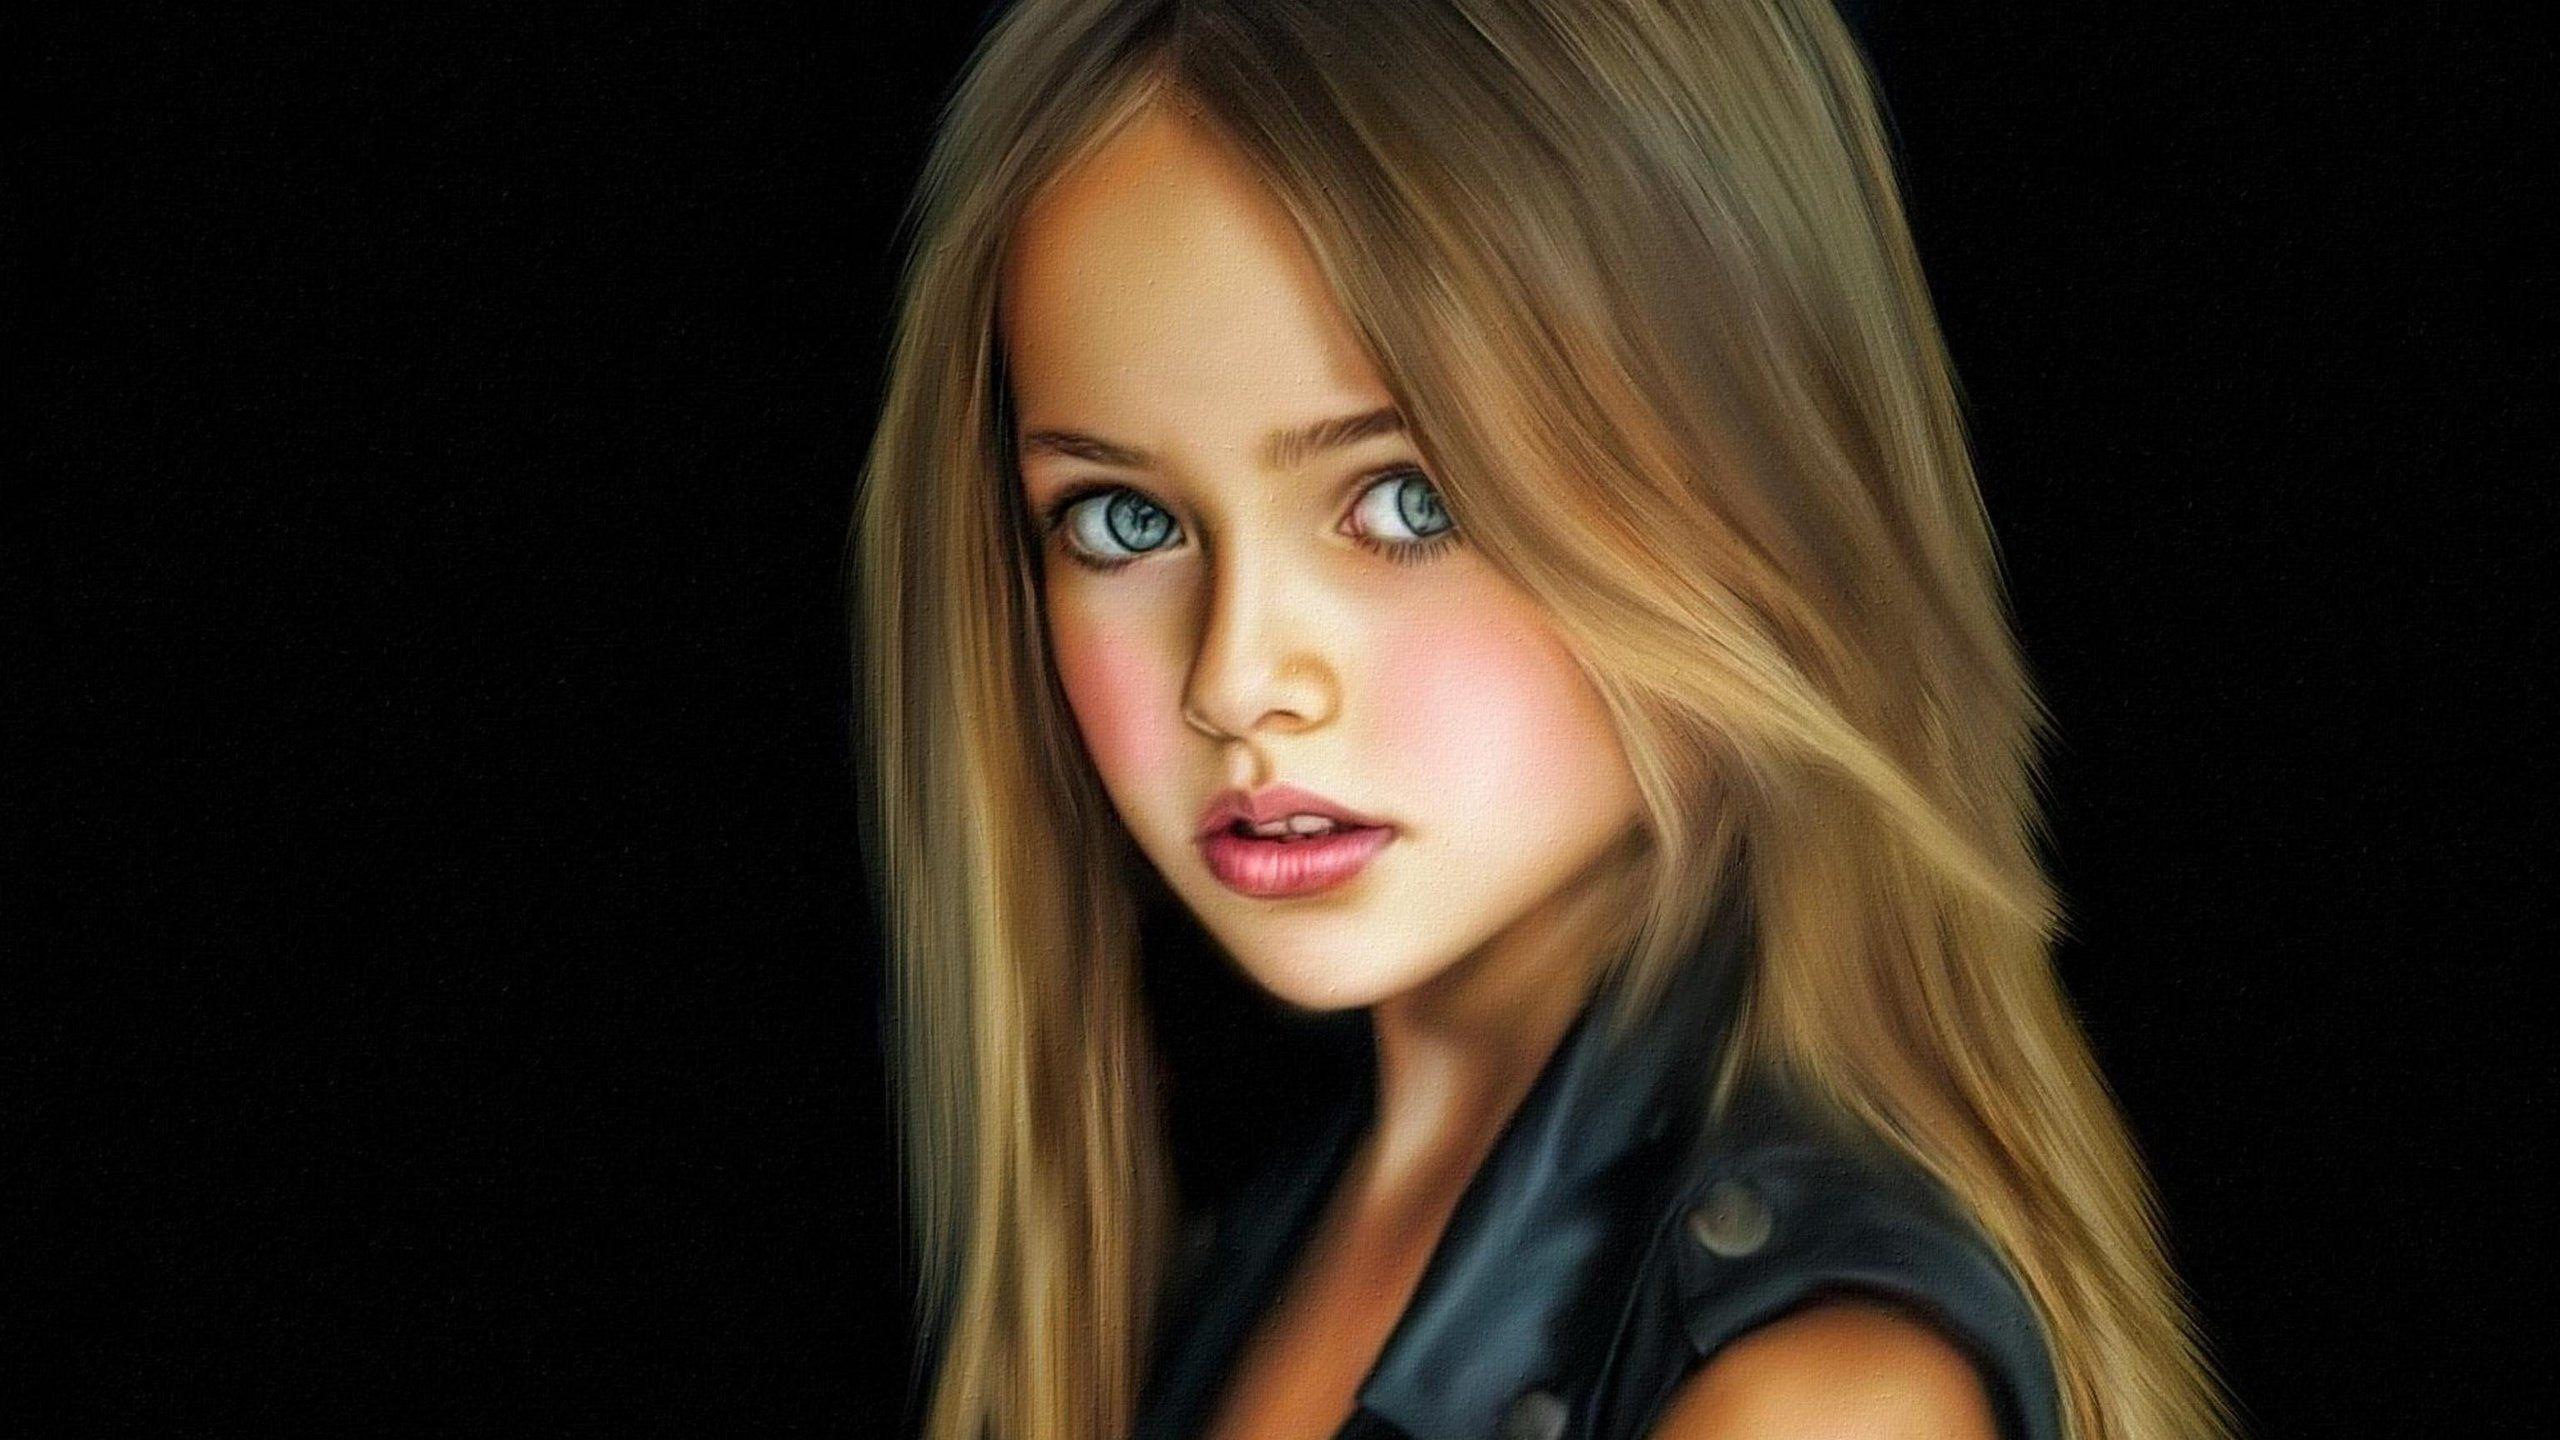 Wallpaper download portrait, children, girl, hair, face resolution